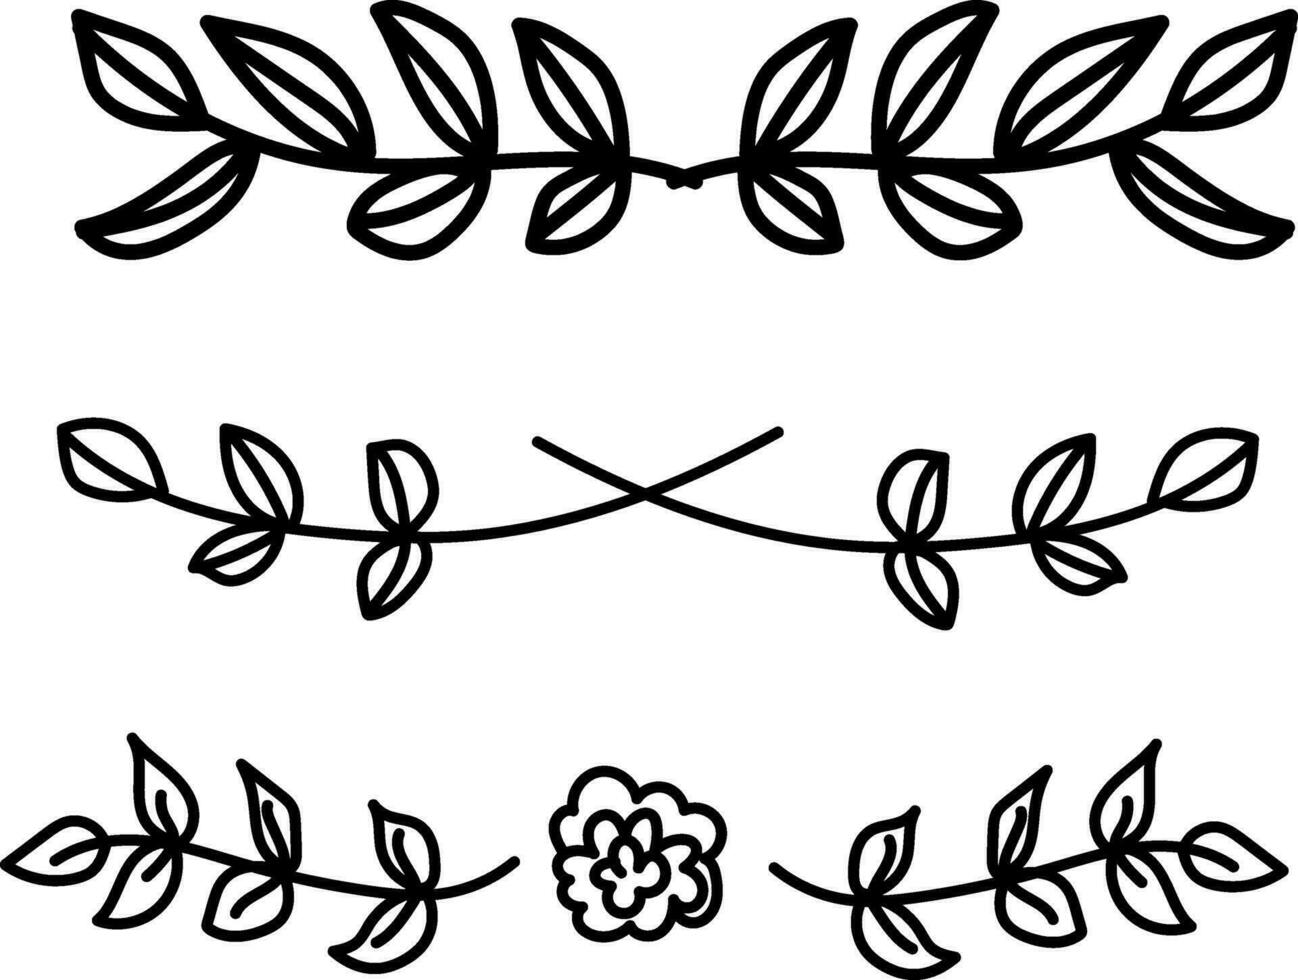 Hand drawn ornament divider collection, hand drawn clipart, borders clipart design element, doodle dividers, hand drawn line borders, leaf design, vintage ornaments, decorament element vector